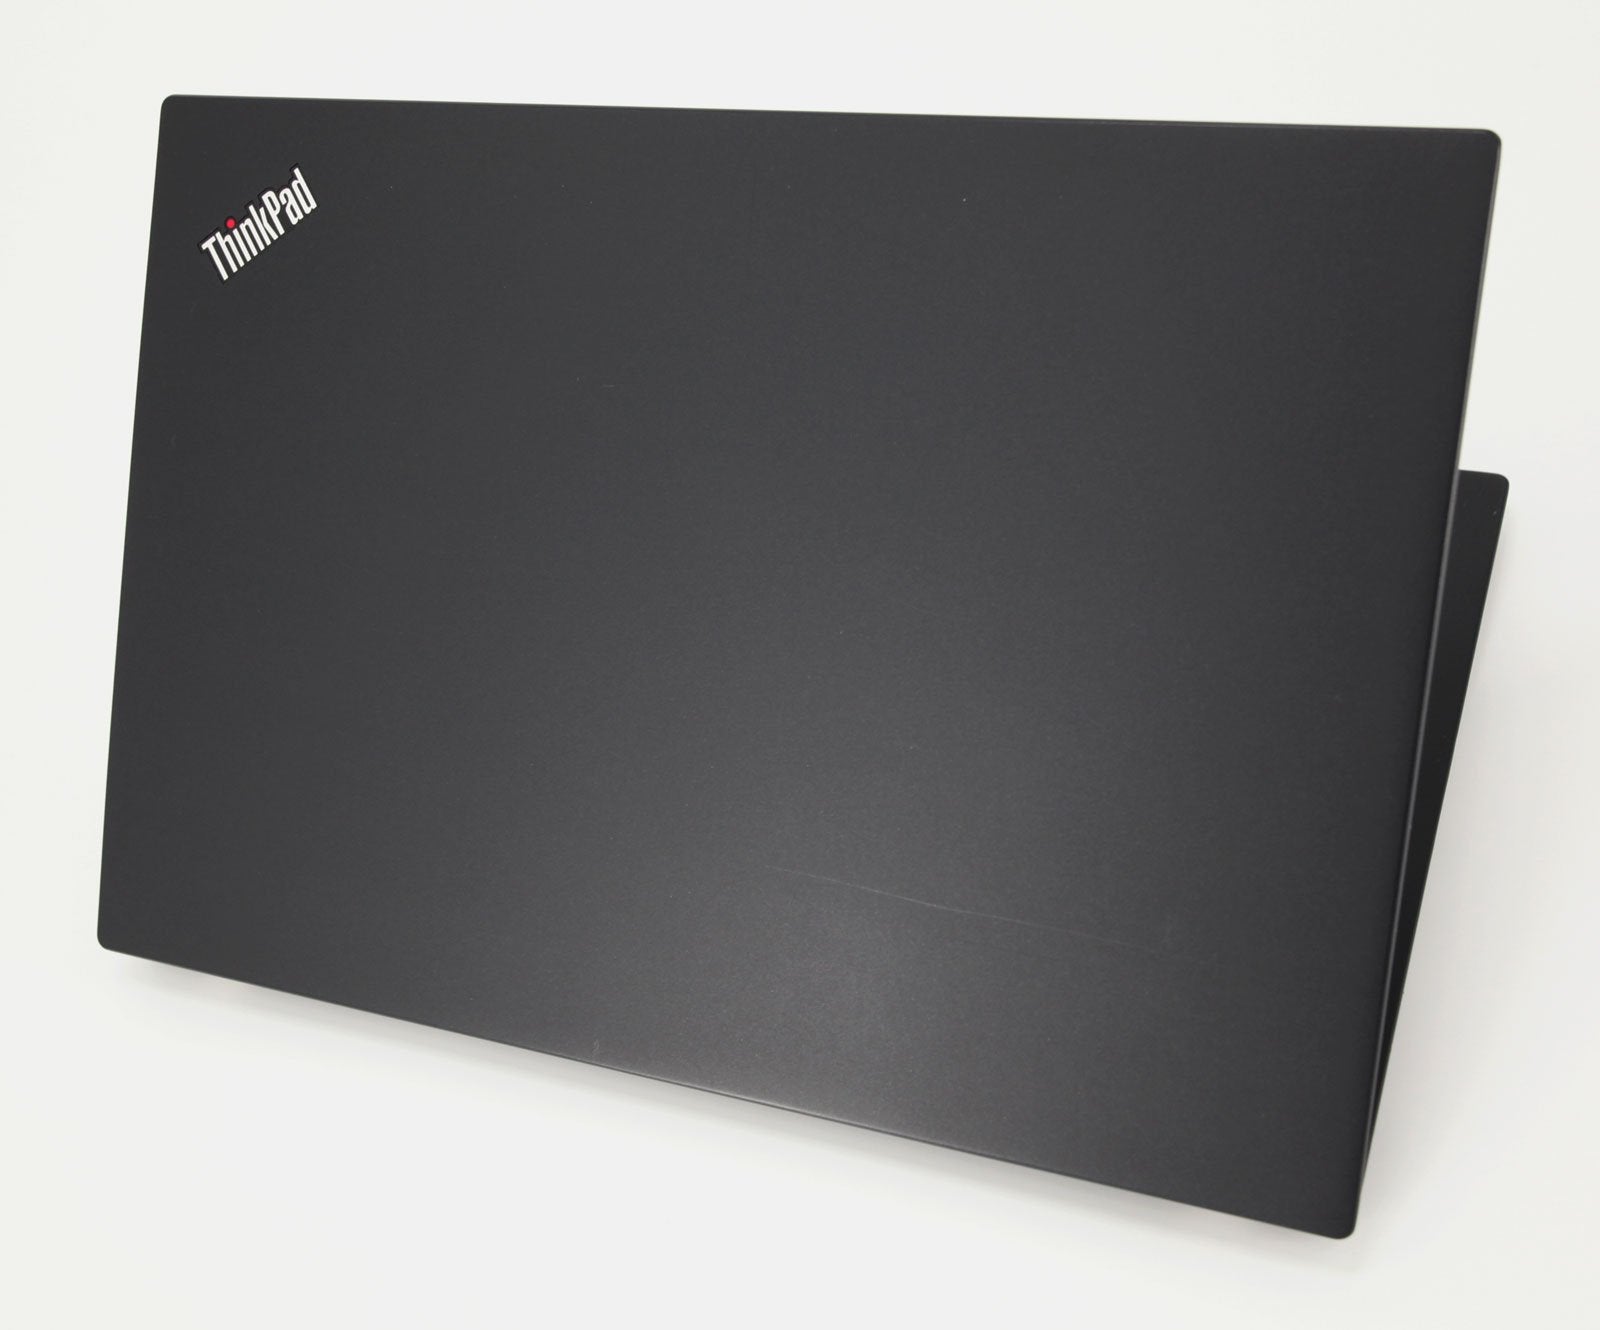 Lenovo Thinkpad X280 Laptop: Core i7-8550U, 512GB, 16GB RAM, LTE, Warranty - CruiseTech